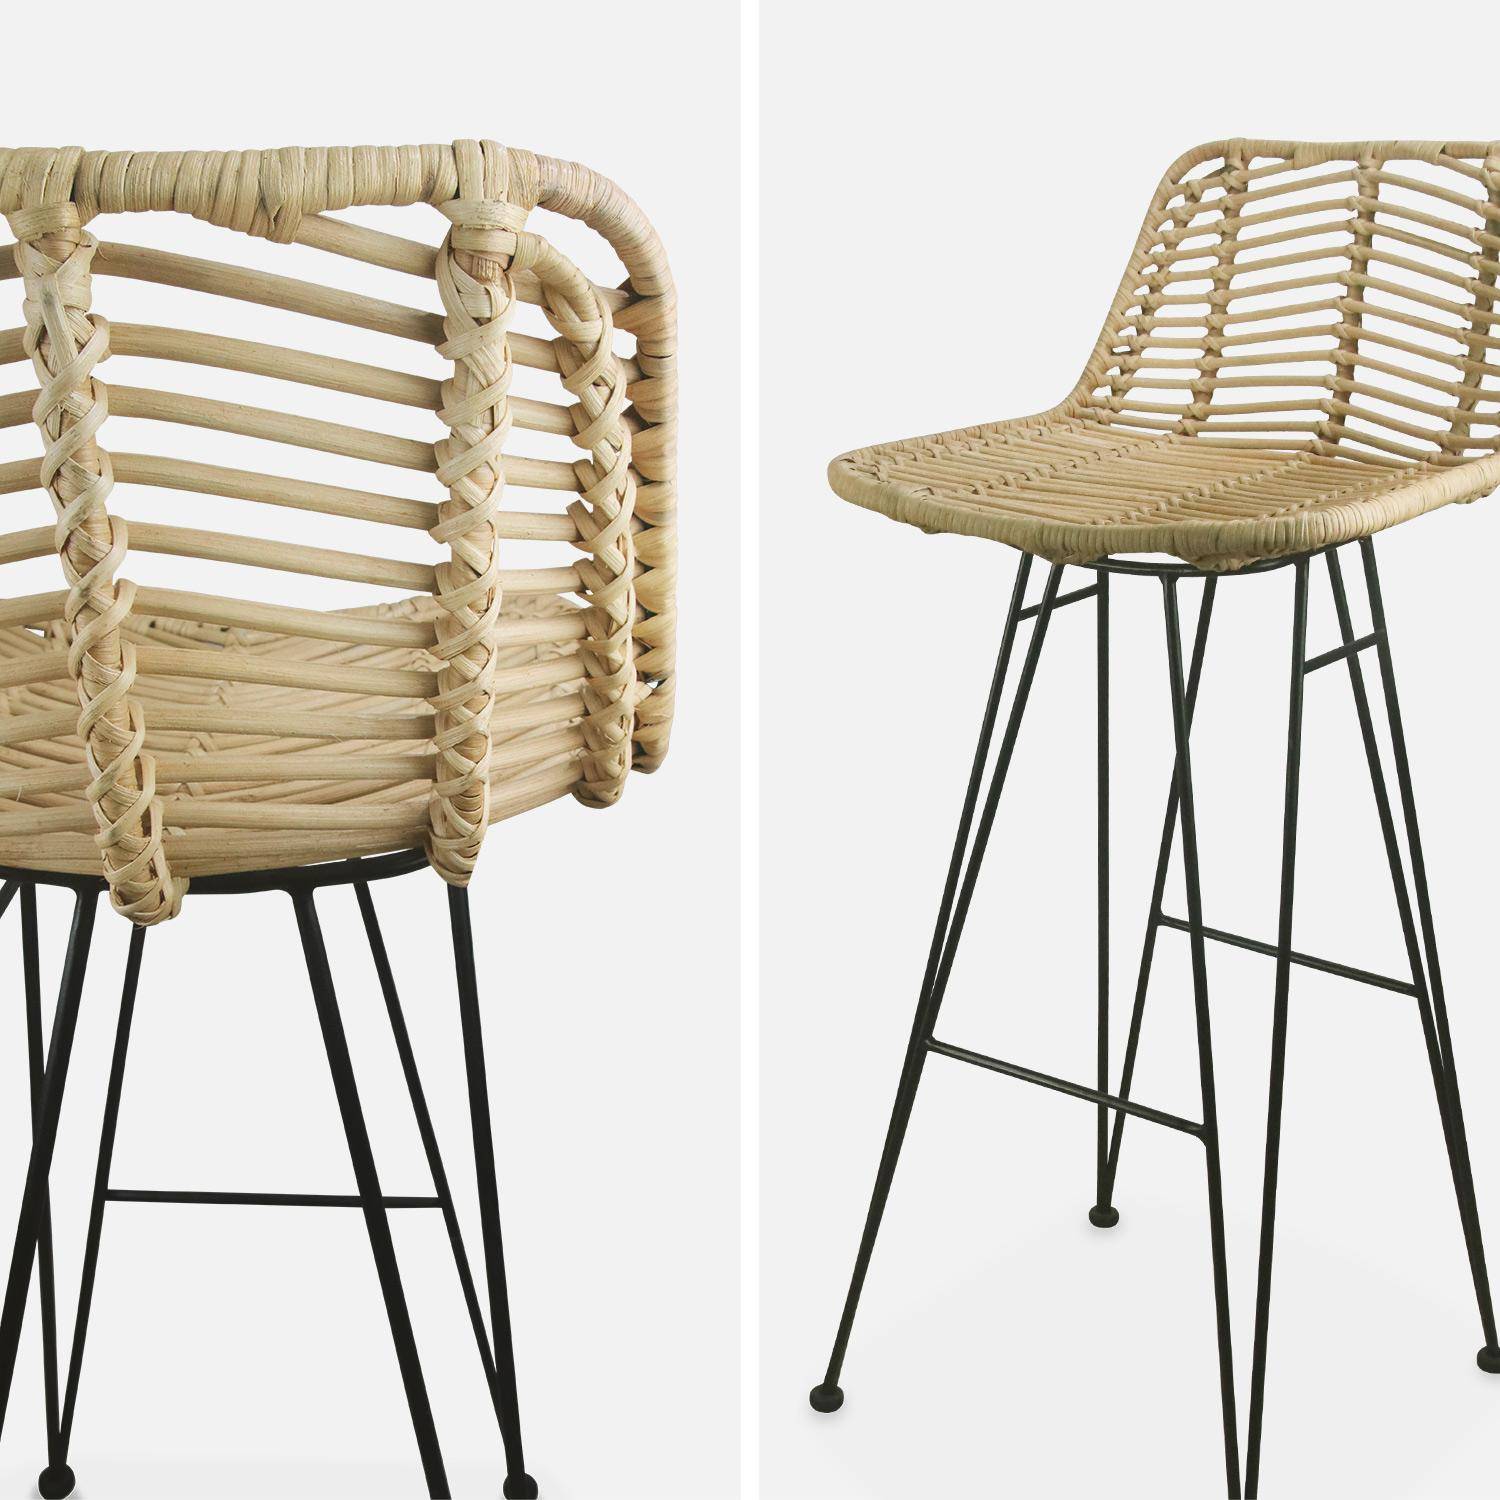 Pair of rattan bar stools, natural, L42.5xD48xH97cm, Cahya,sweeek,Photo8